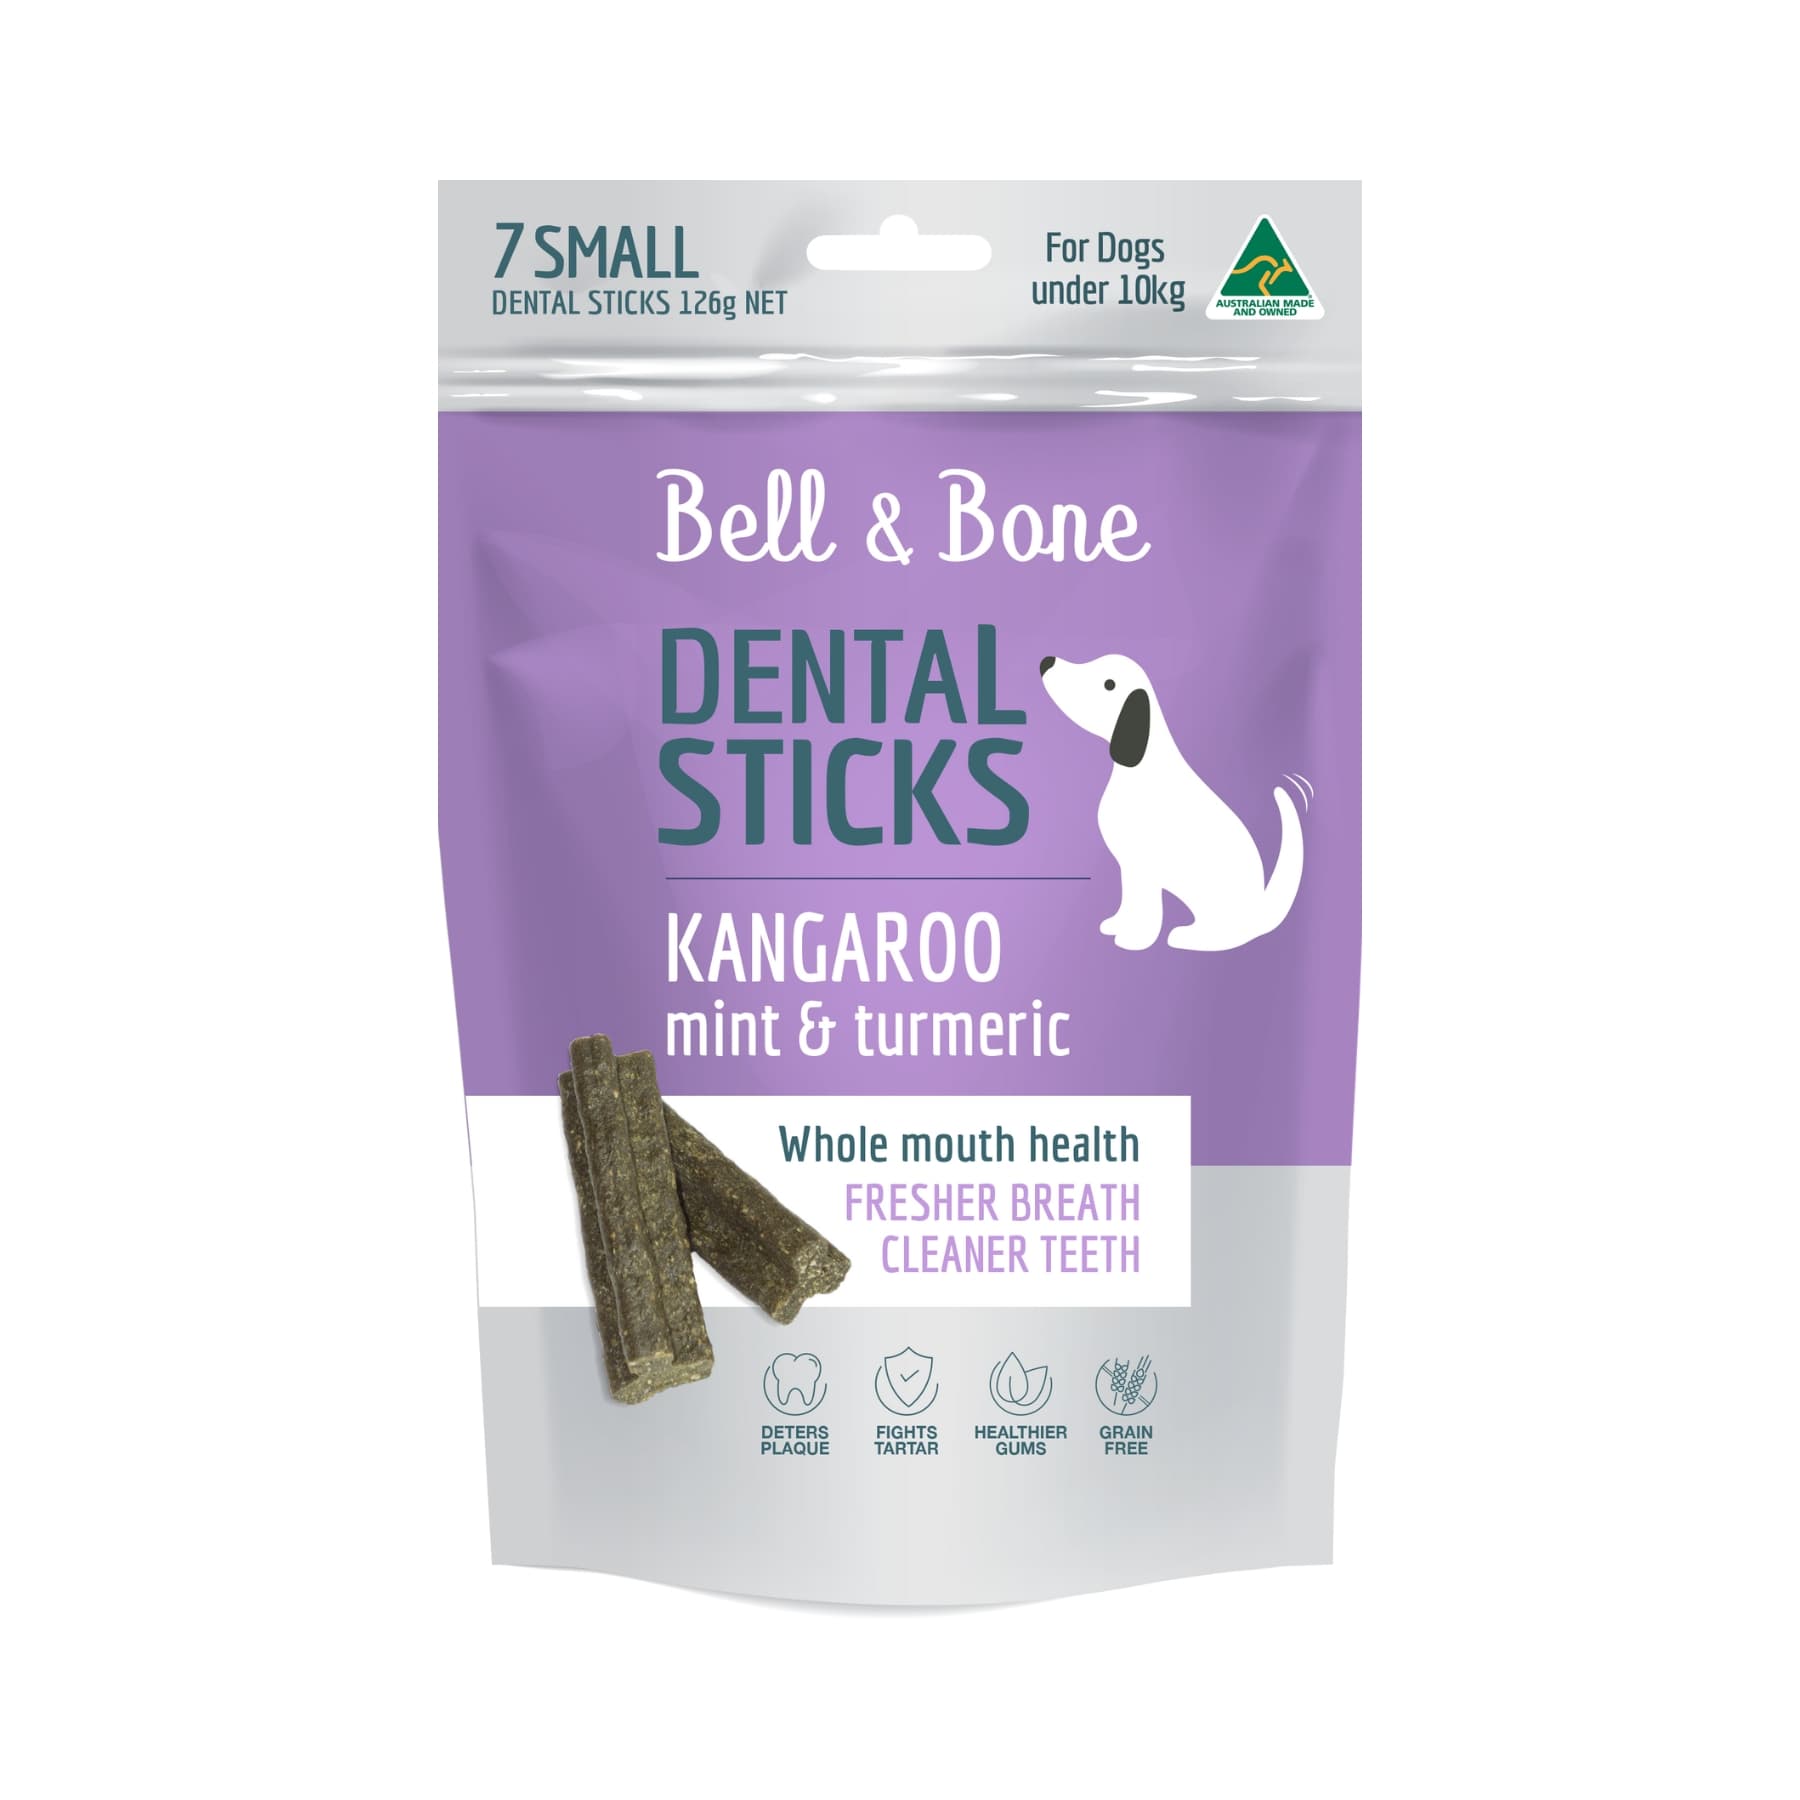 Bell & Bone Dental Sticks Kangaroo, Mint & Turmeric Small. Australian Made Dental Treats for Dogs